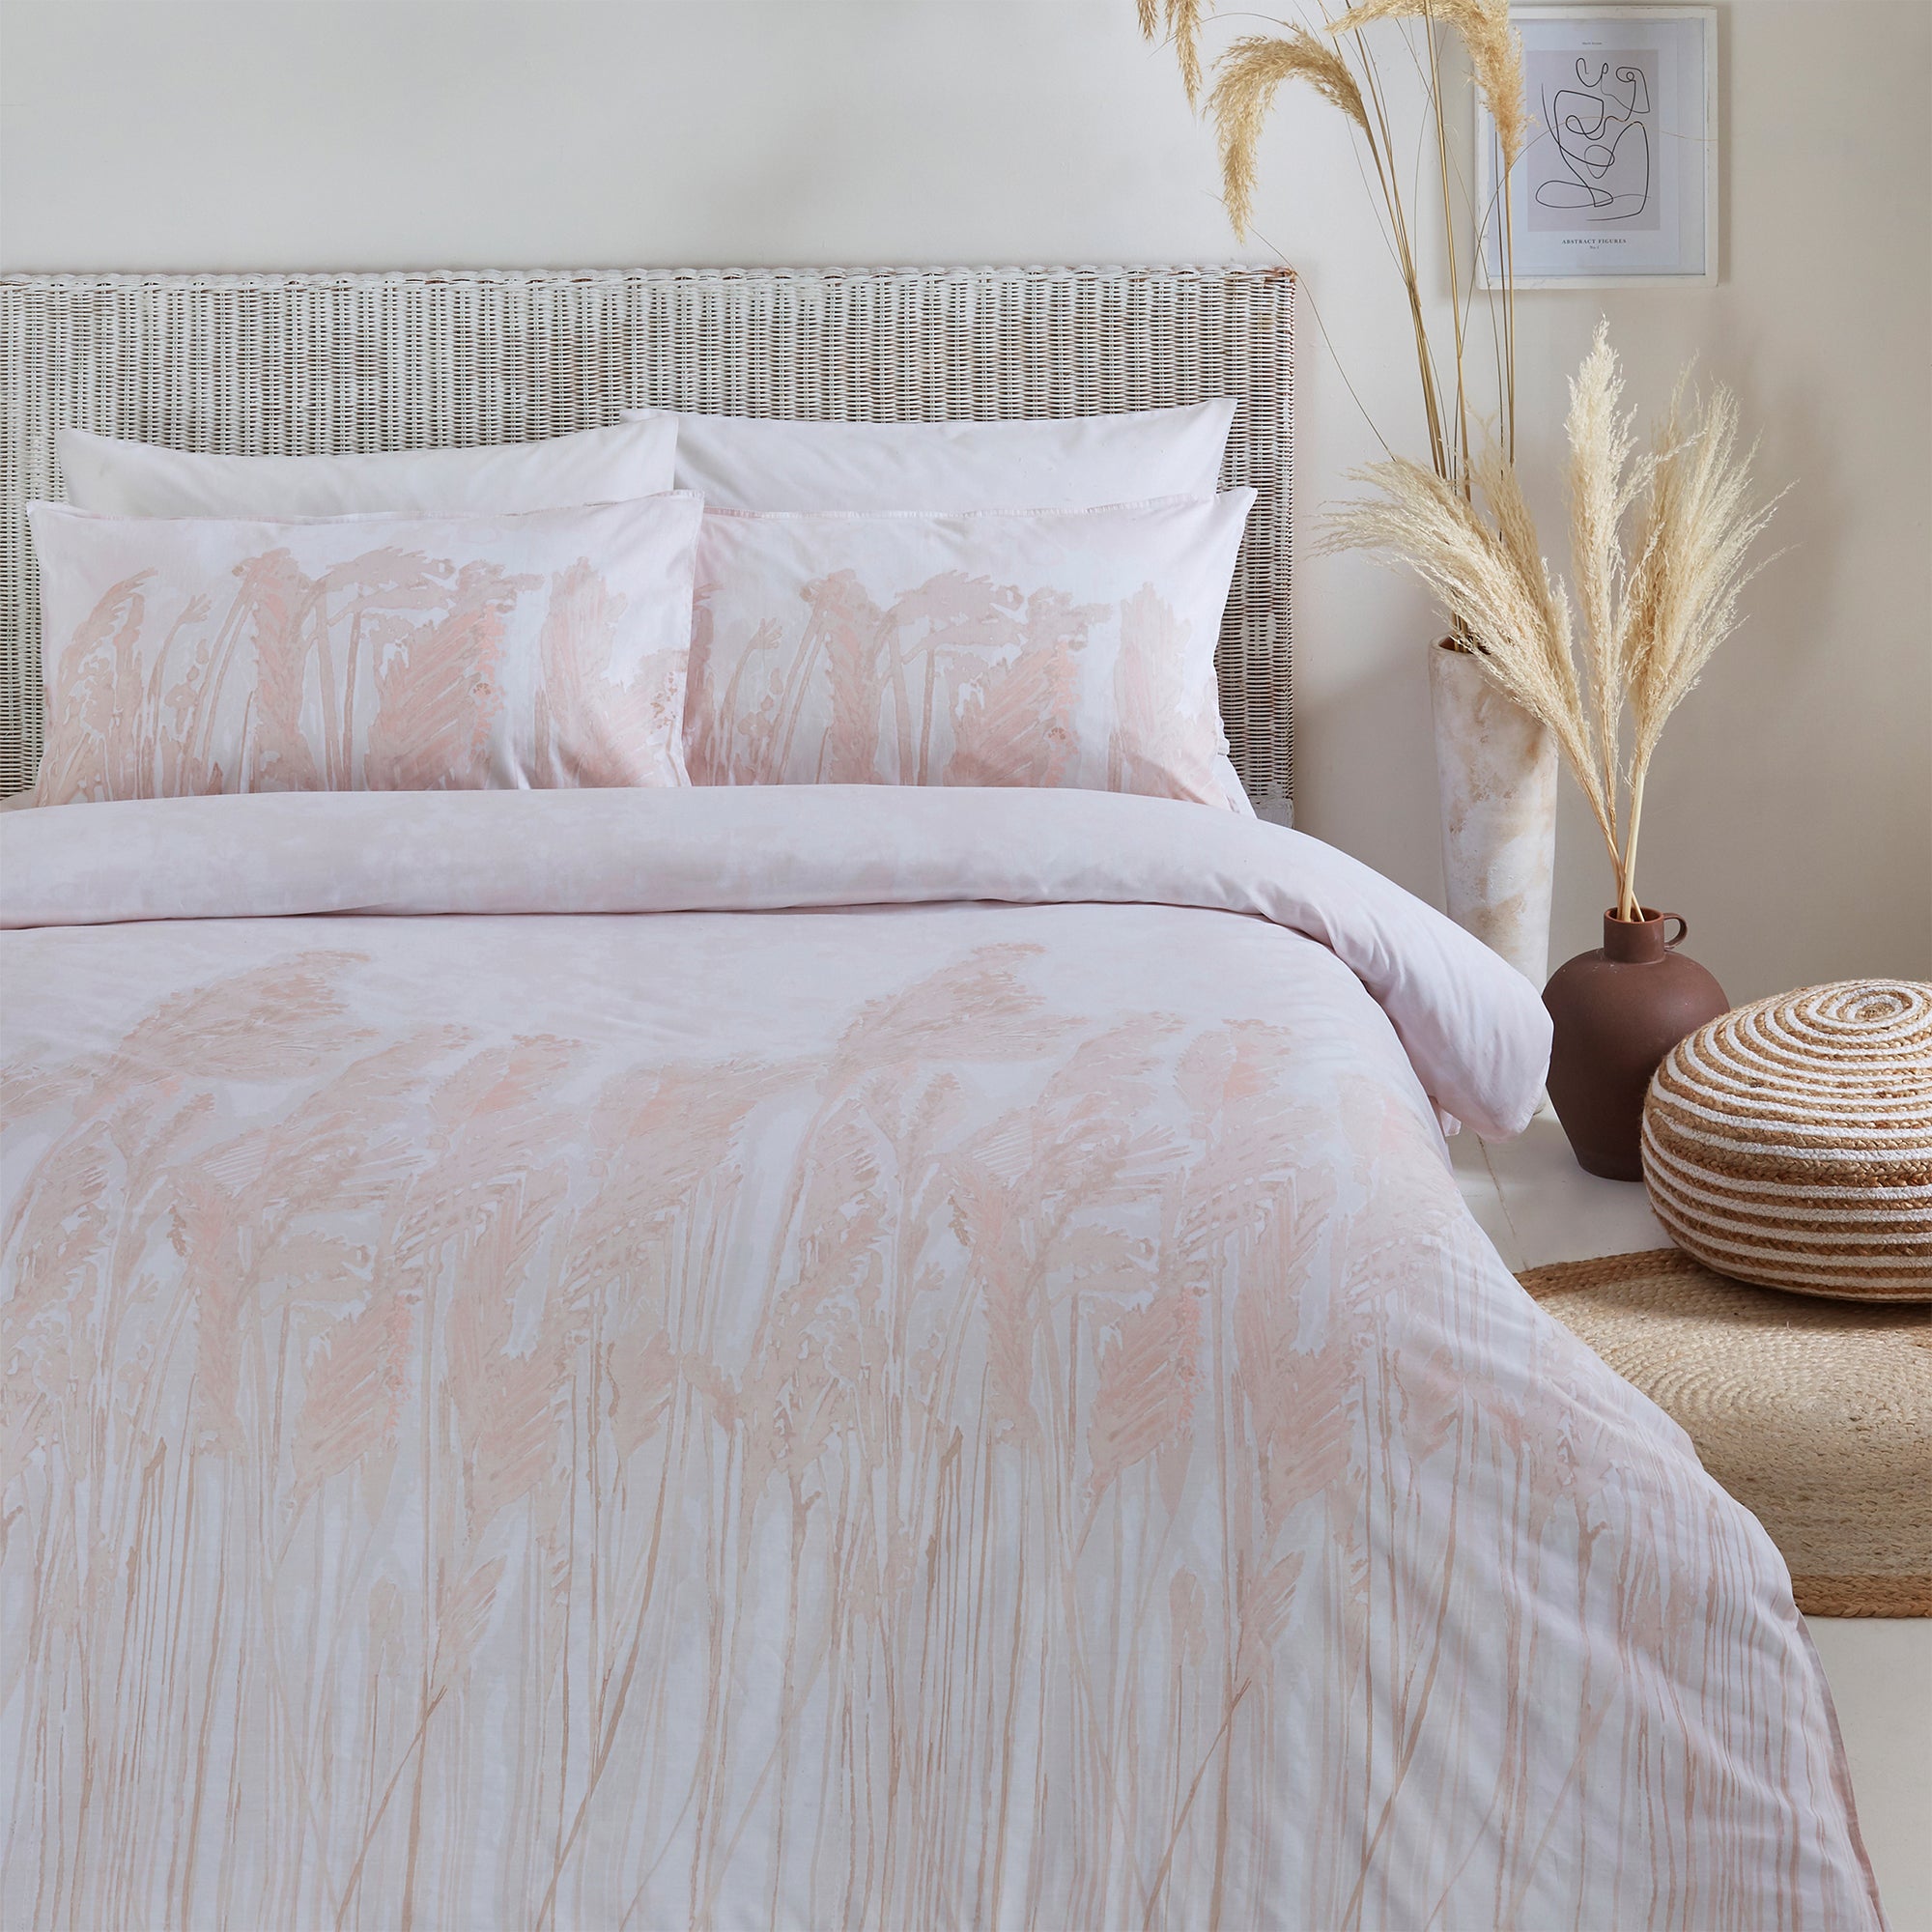 Pampas Grass Blush 100% Cotton Reversible Duvet Cover and Pillowcase Set Pink/White